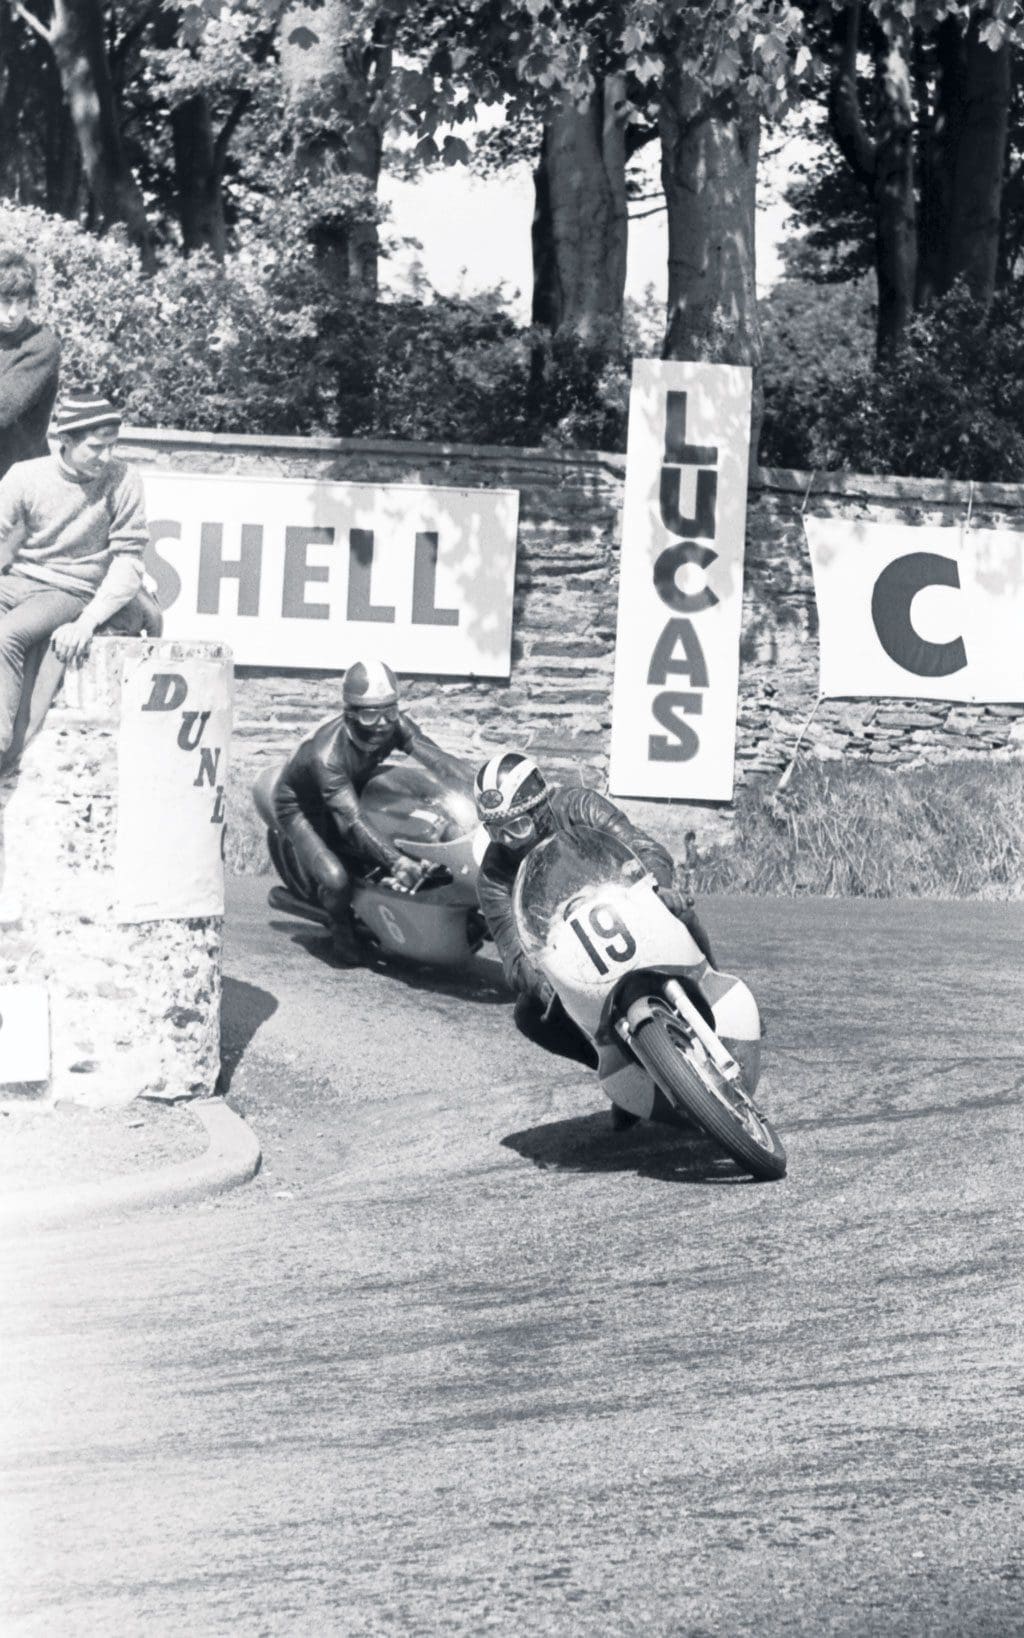 1965 350 TT Isle of Man Phil Read leads Giacomo Agostini on MV.